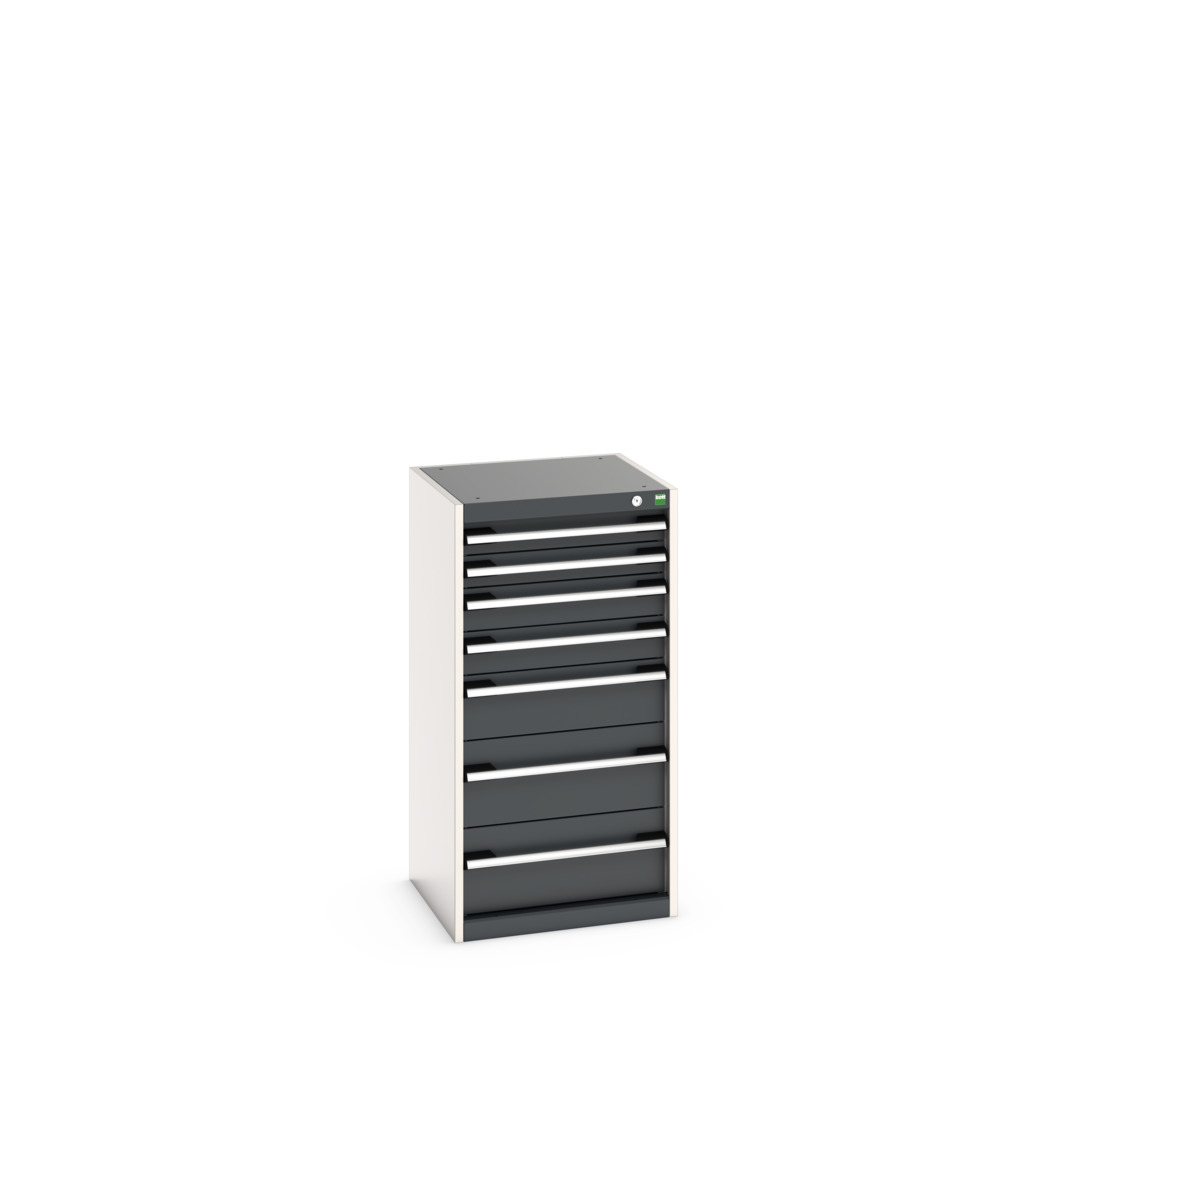 40010051. - cubio drawer cabinet